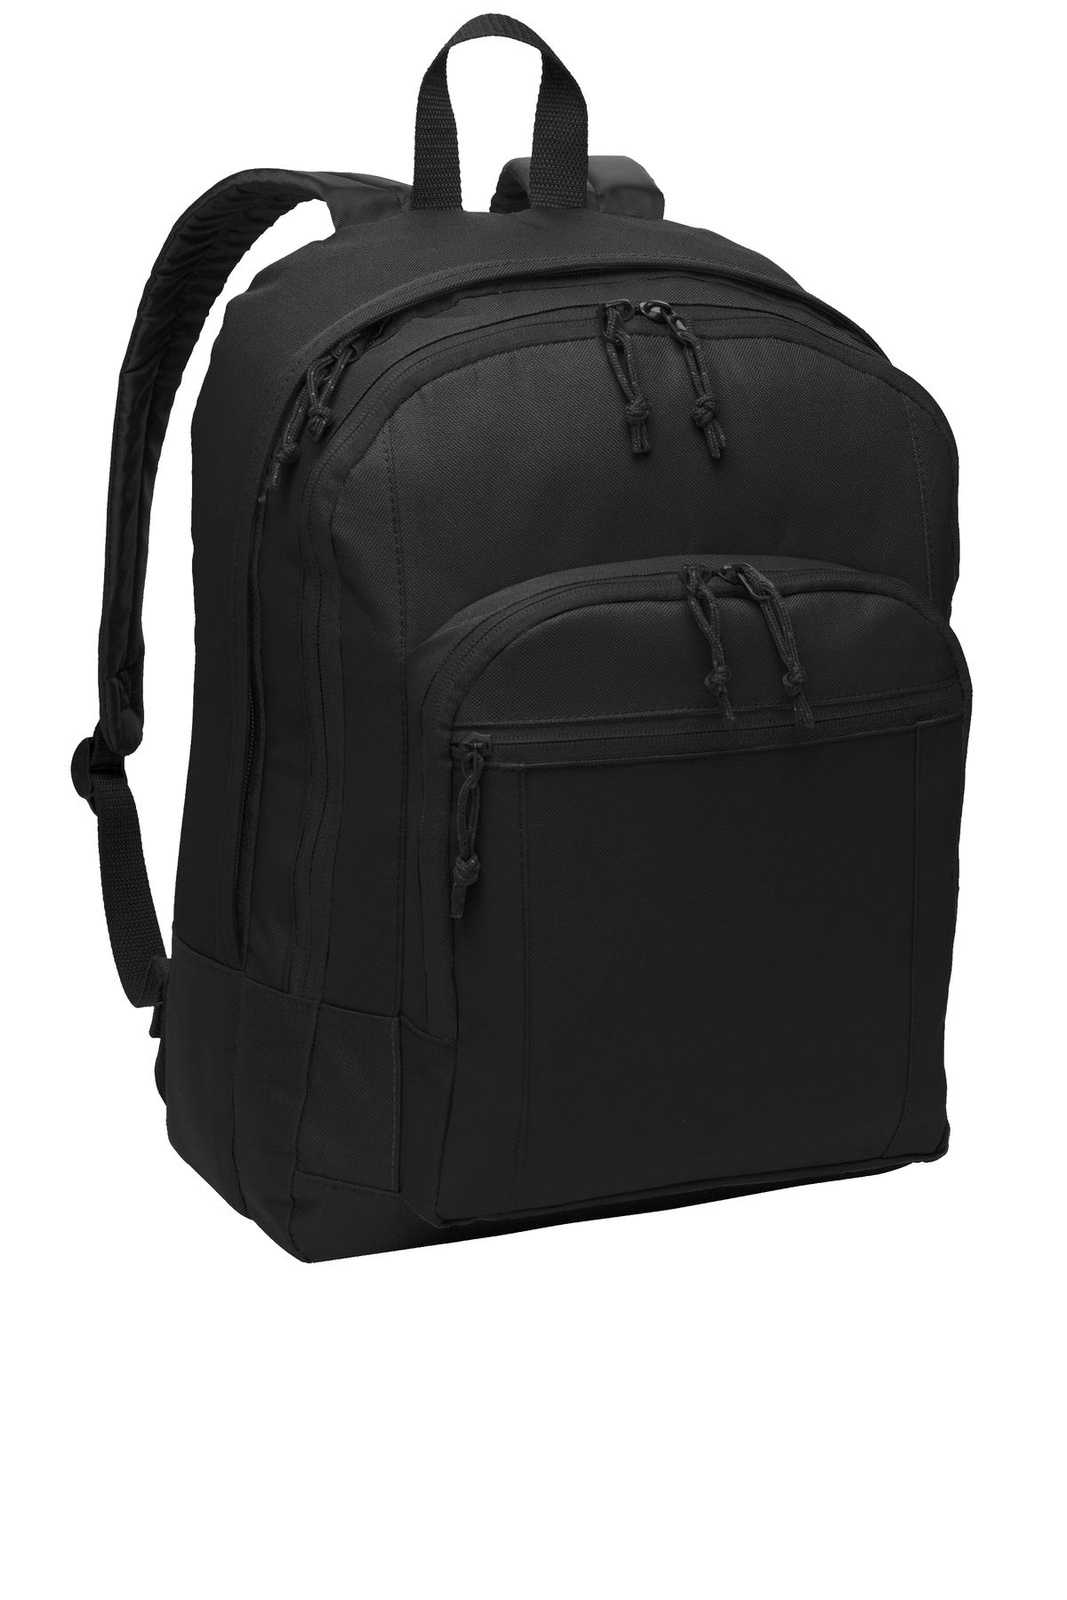 Port Authority BG204 Basic Backpack - Black - HIT a Double - 1